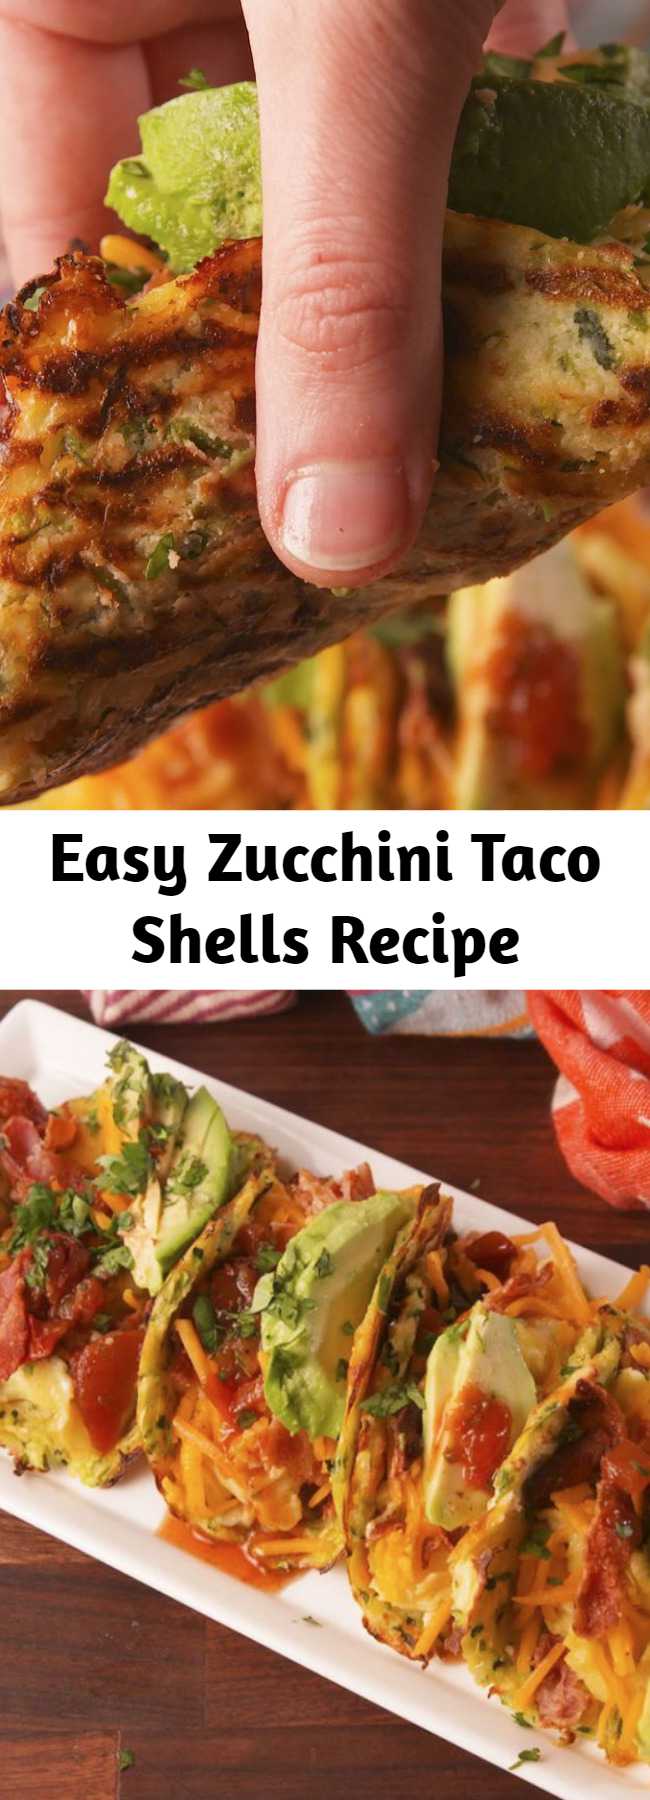 Easy Zucchini Taco Shells Recipe - Turn zucchini into taco shells for your next taco night. #easy #recipe #healthy #zucchini #taco #tacoshells #diet #lowcarb #lowcarbdiet